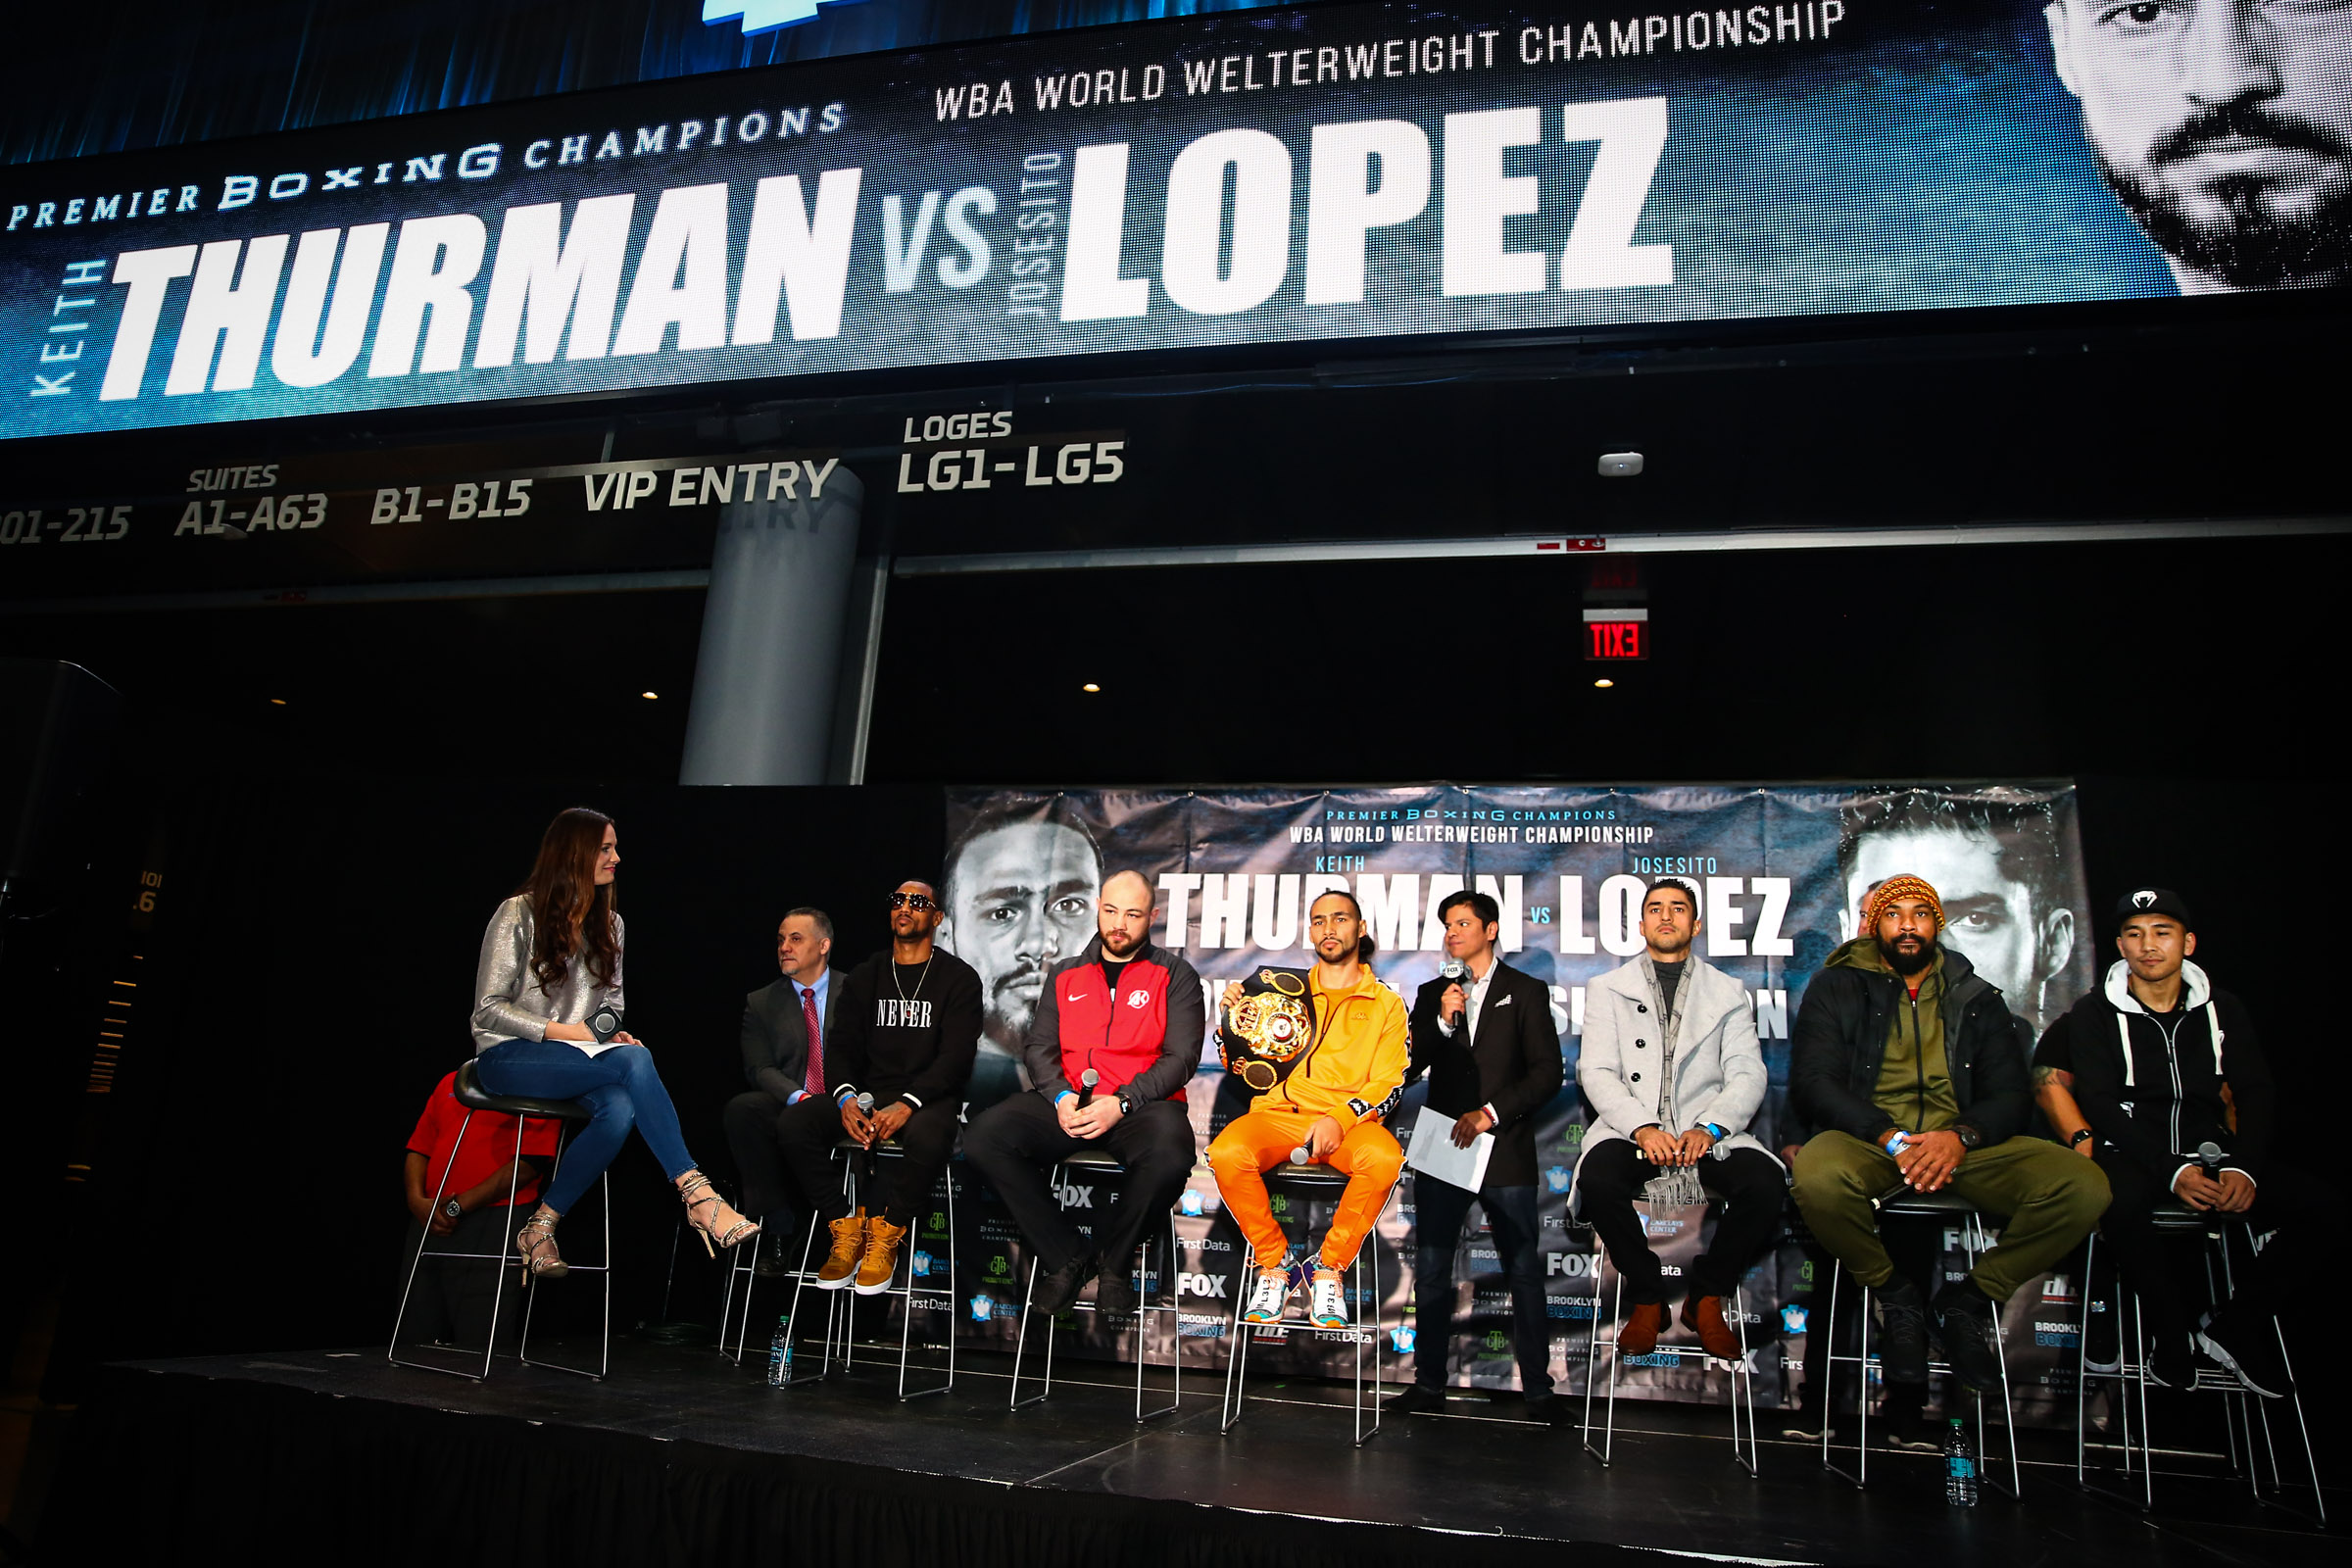 Thurman vs Lopez